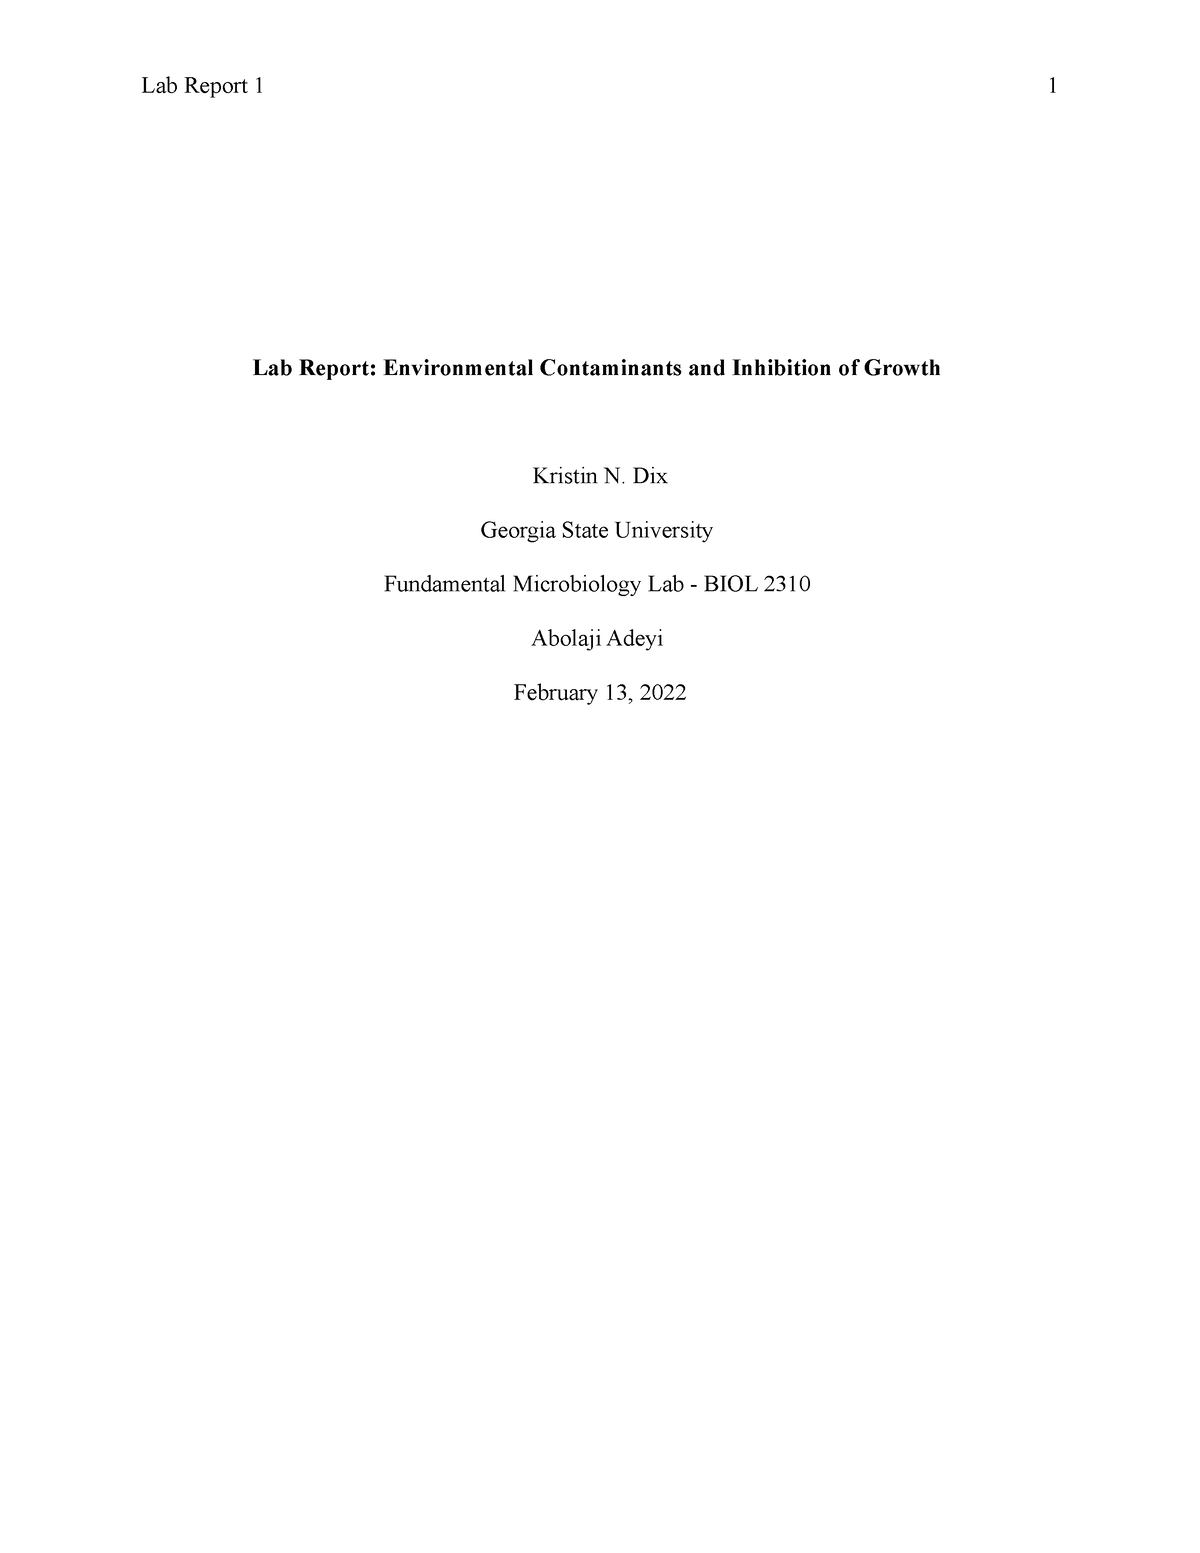 Environmental Contaminants Lab Report - Lab Report: Environmental ...